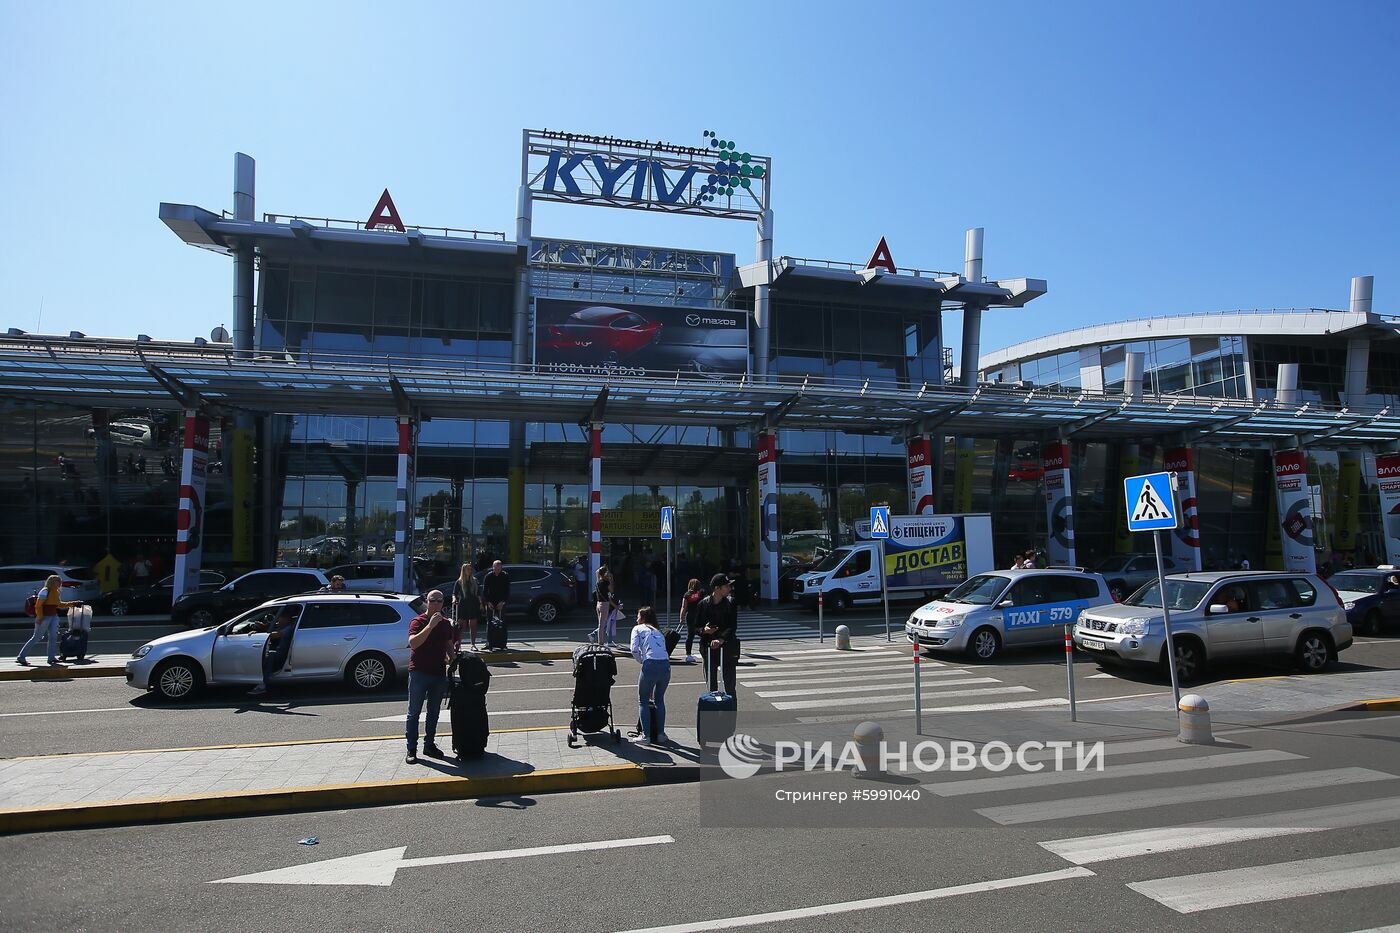 Аэропорт Киев-Жуляны